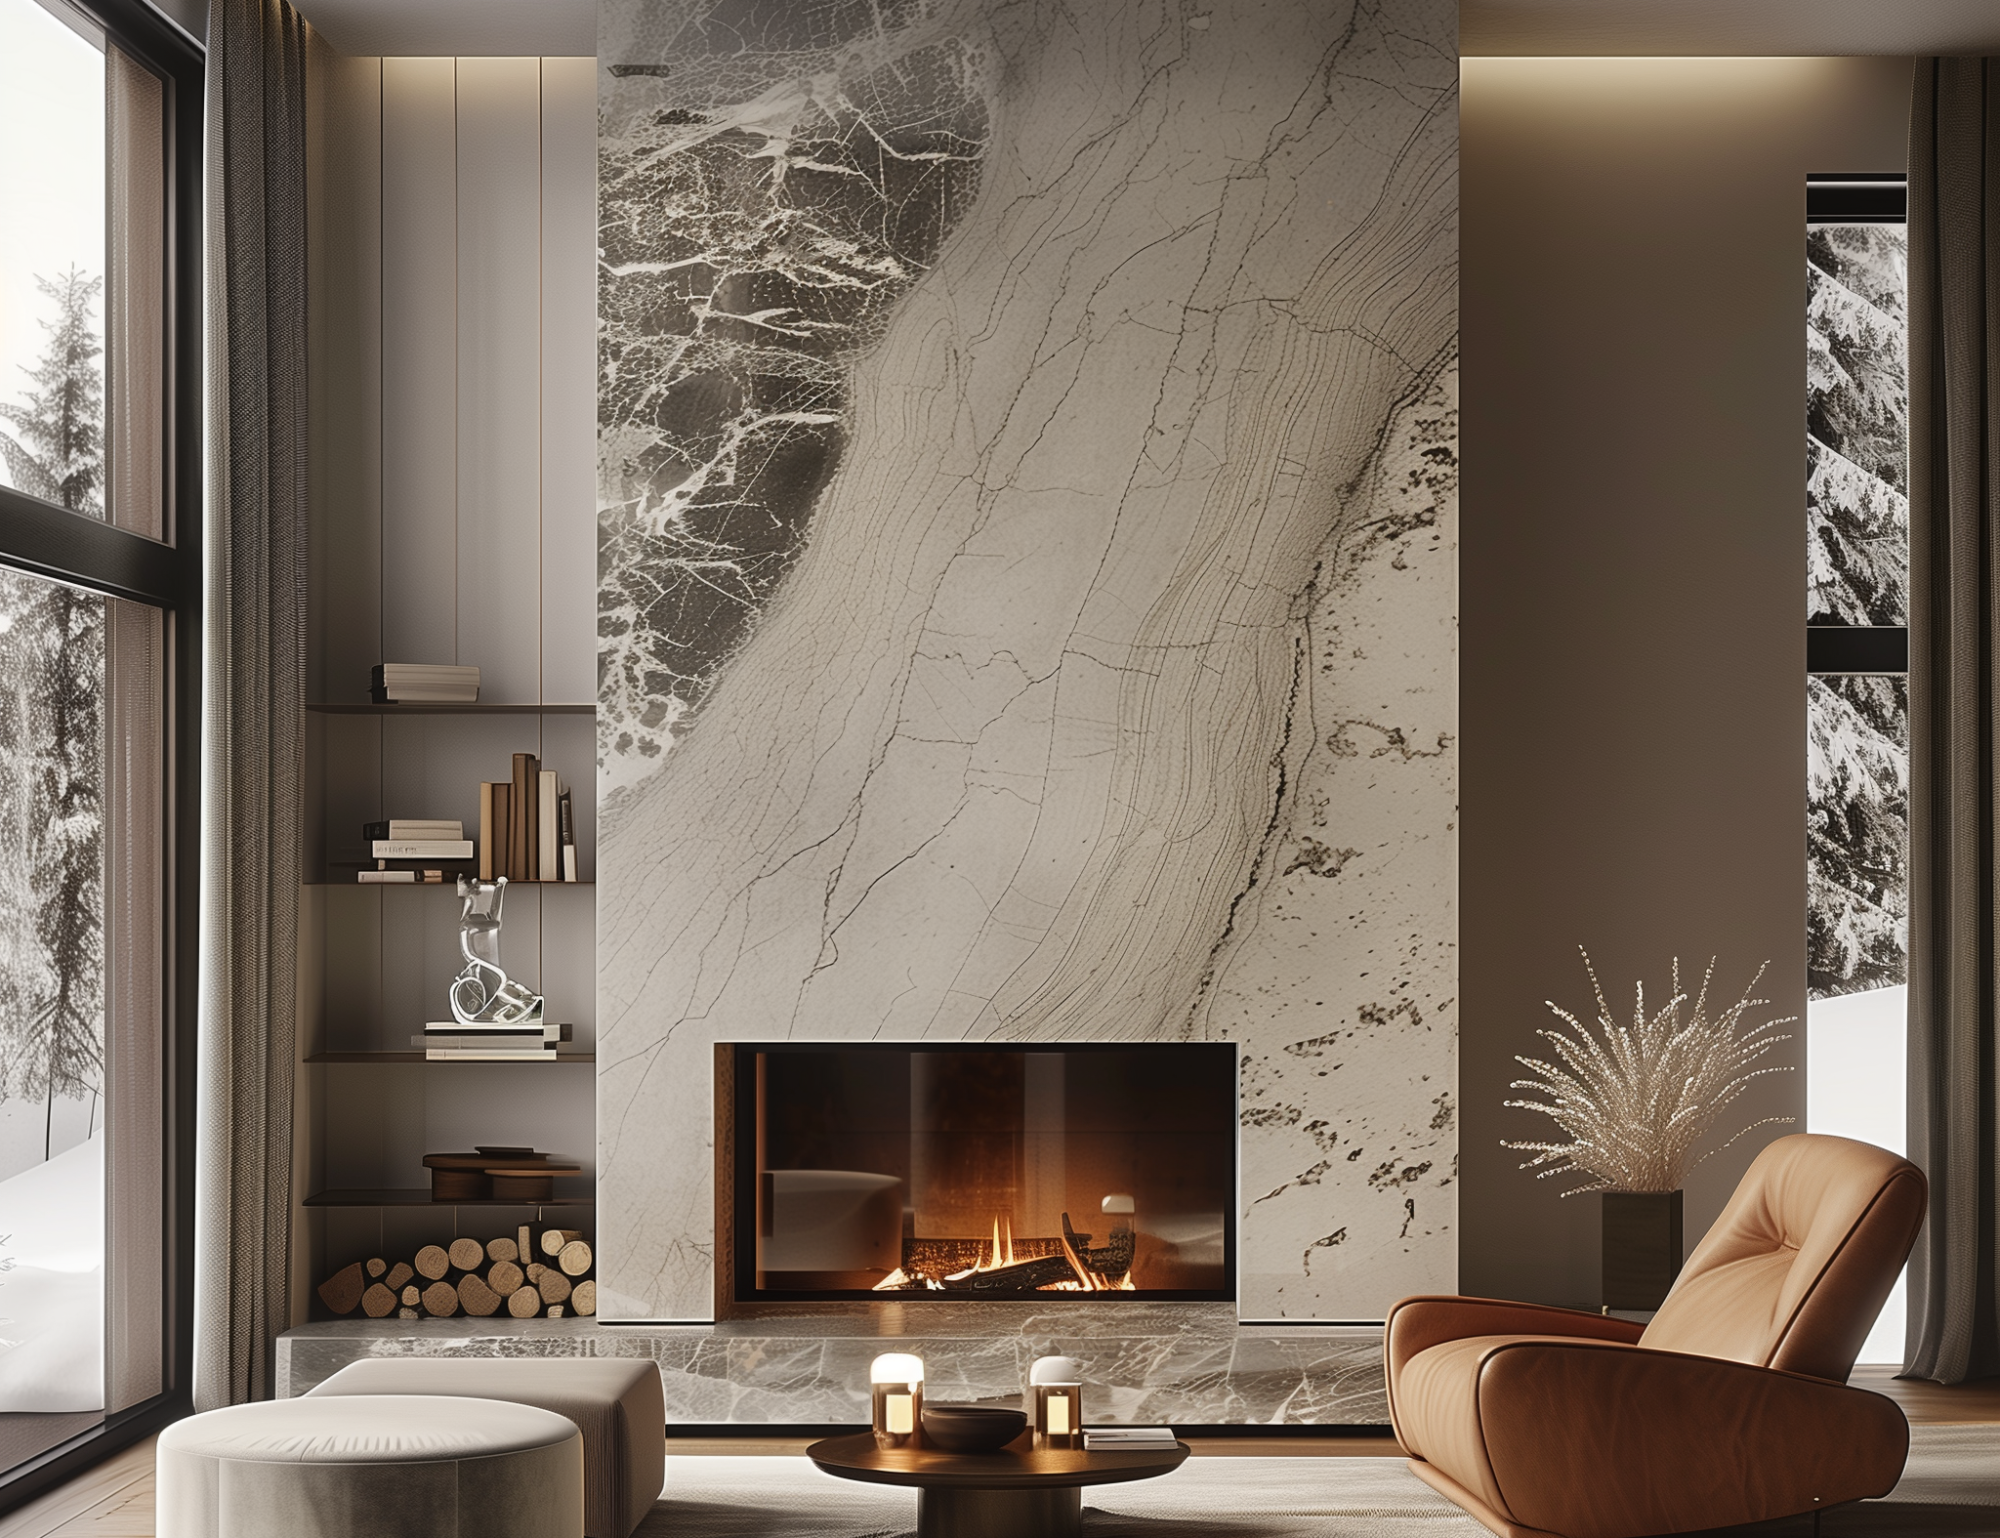 chana_00494_textured_marble_fireplace_warm_cozy_interior_design_57a8e693-1243-45cc-b7dc-4482576e0cf9